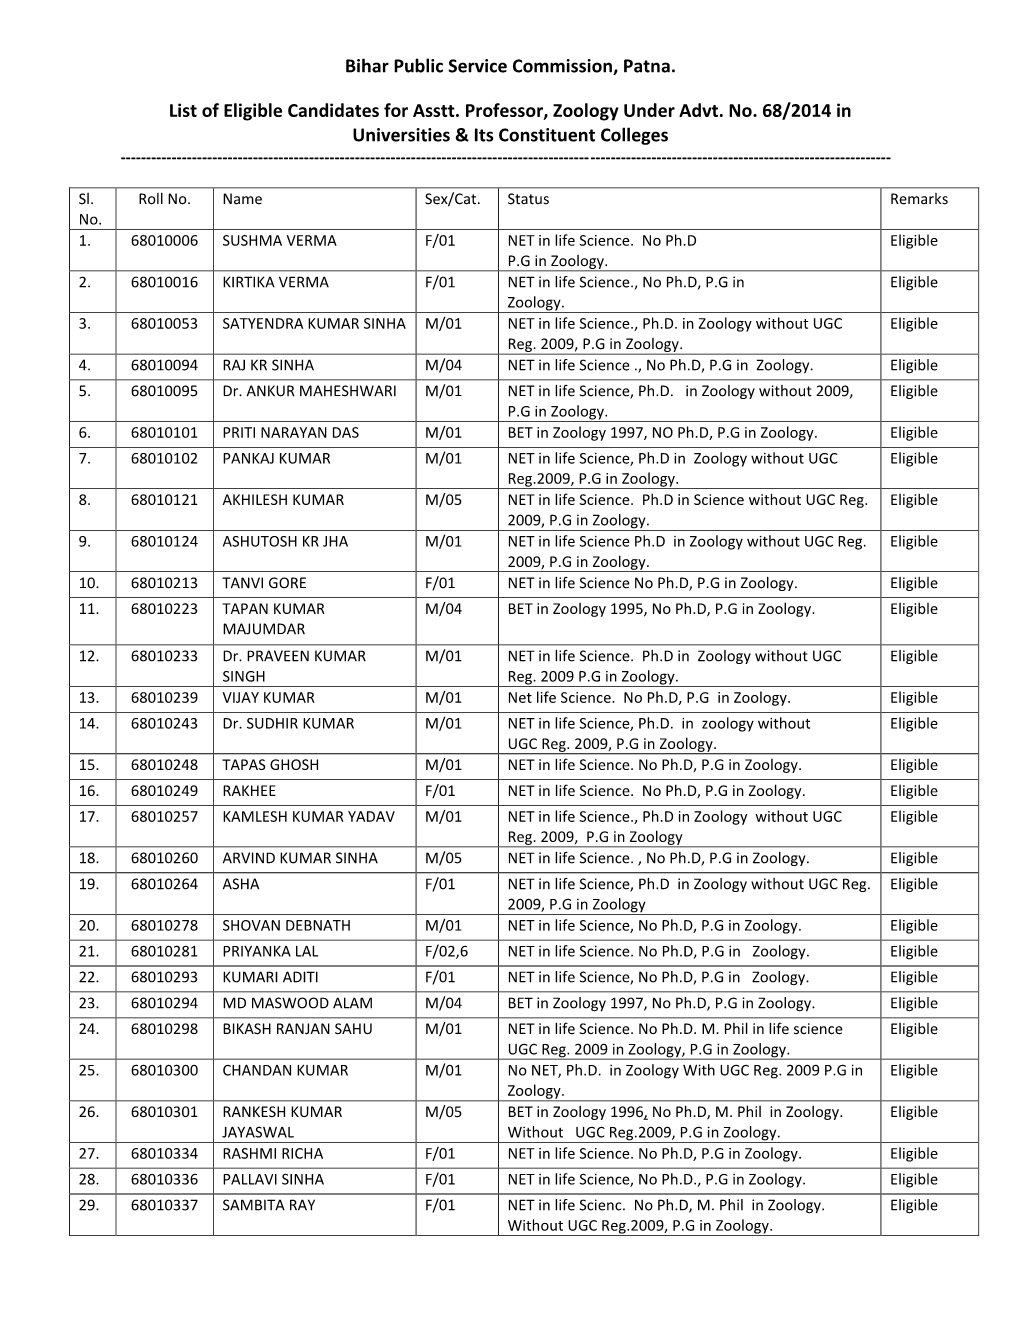 Bihar Public Service Commission, Patna. List of Eligible Candidates